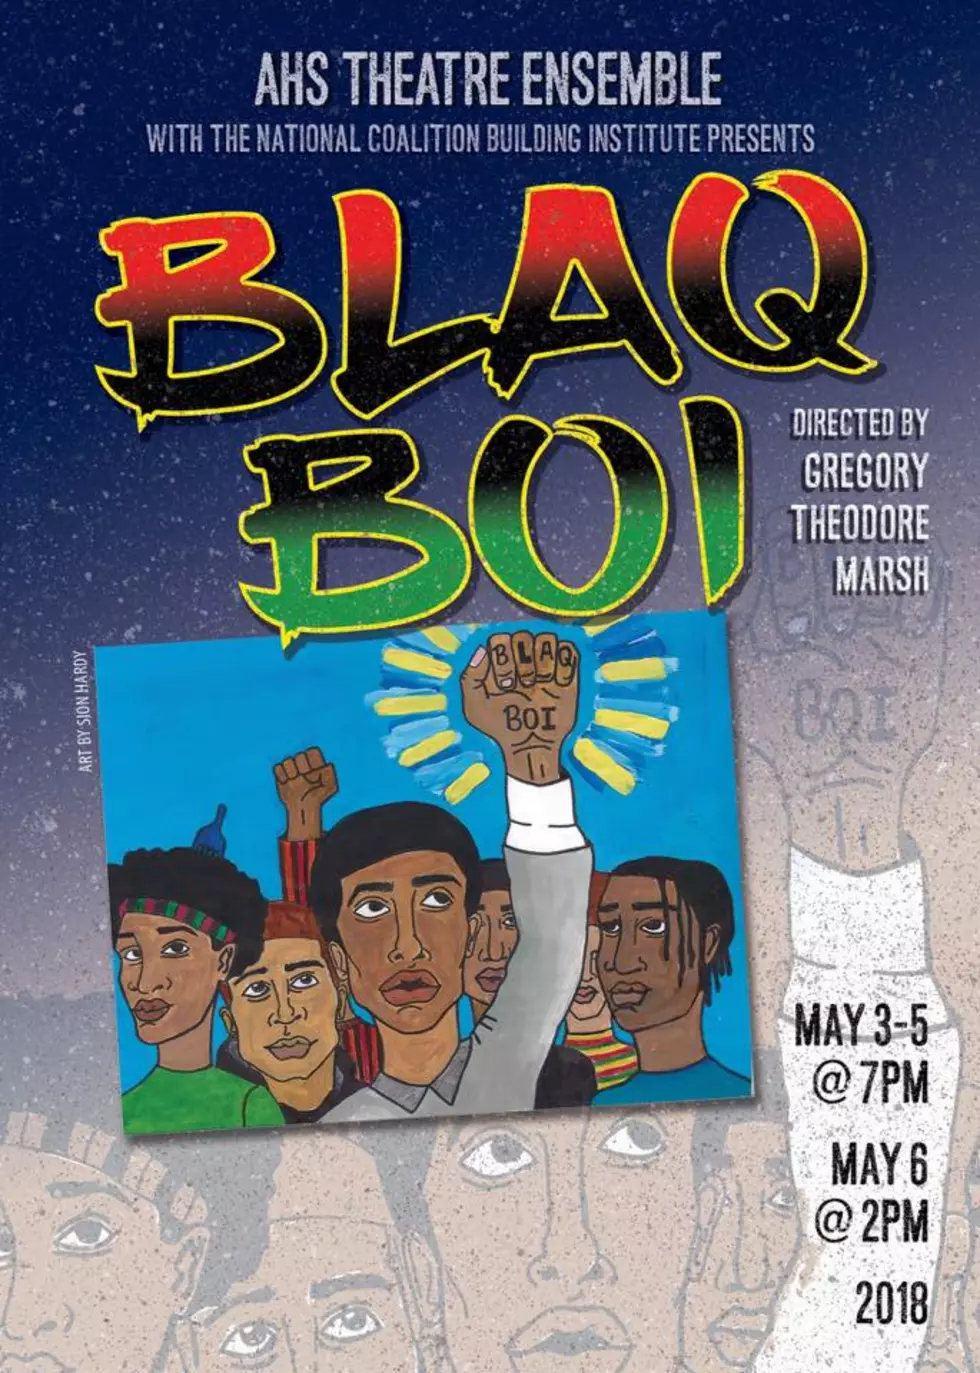 Check Out Albany High Theatre Ensemble’s “Blaq Boi”